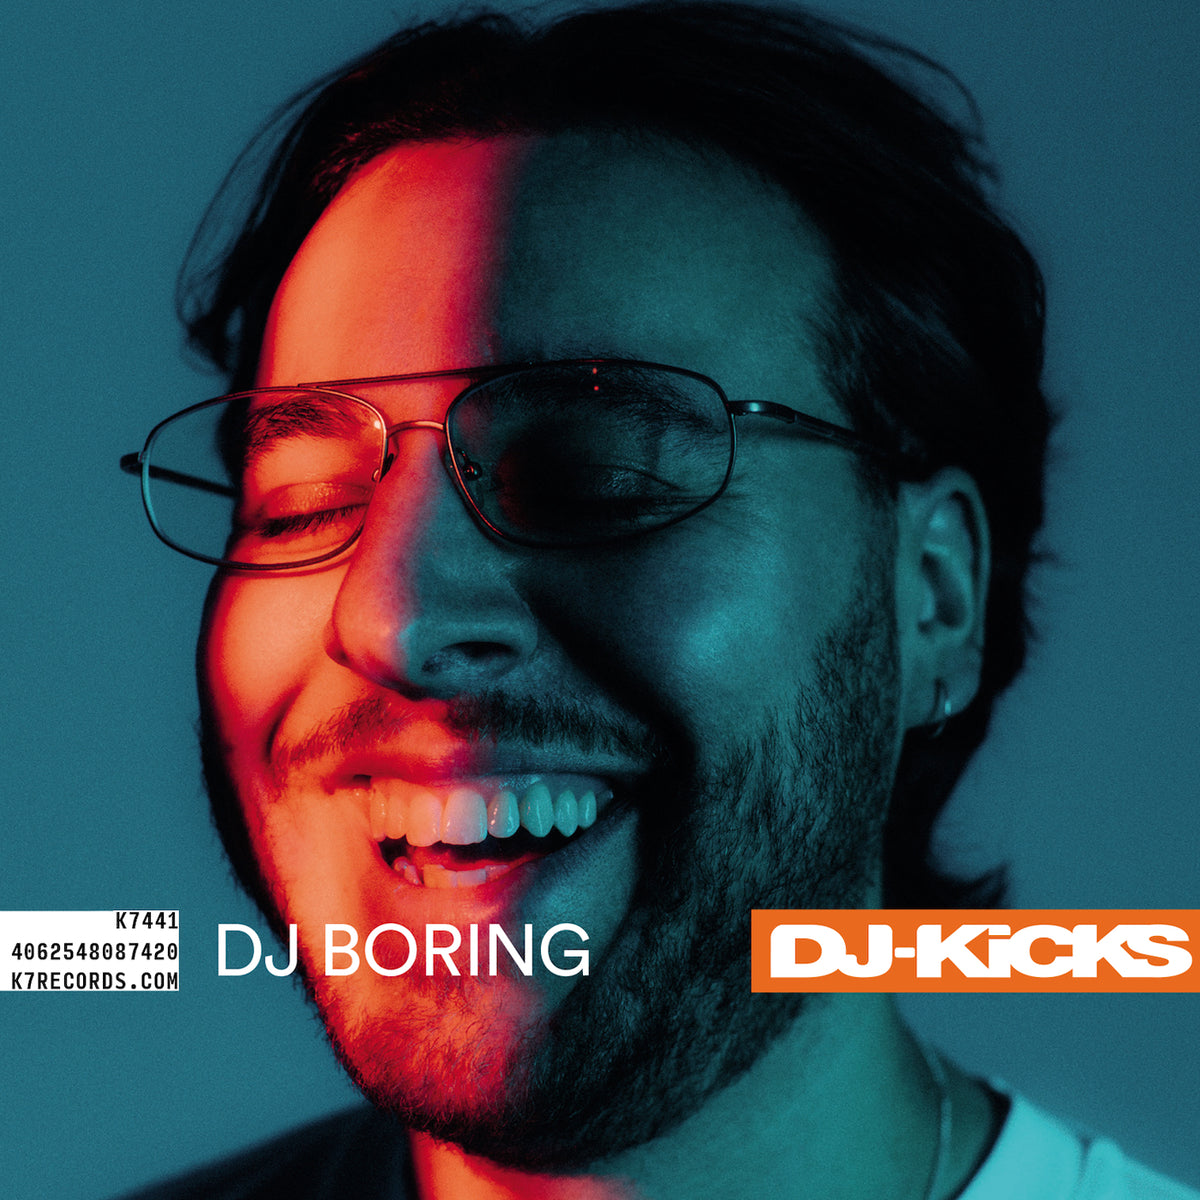 DJ-Kicks: DJ Boring